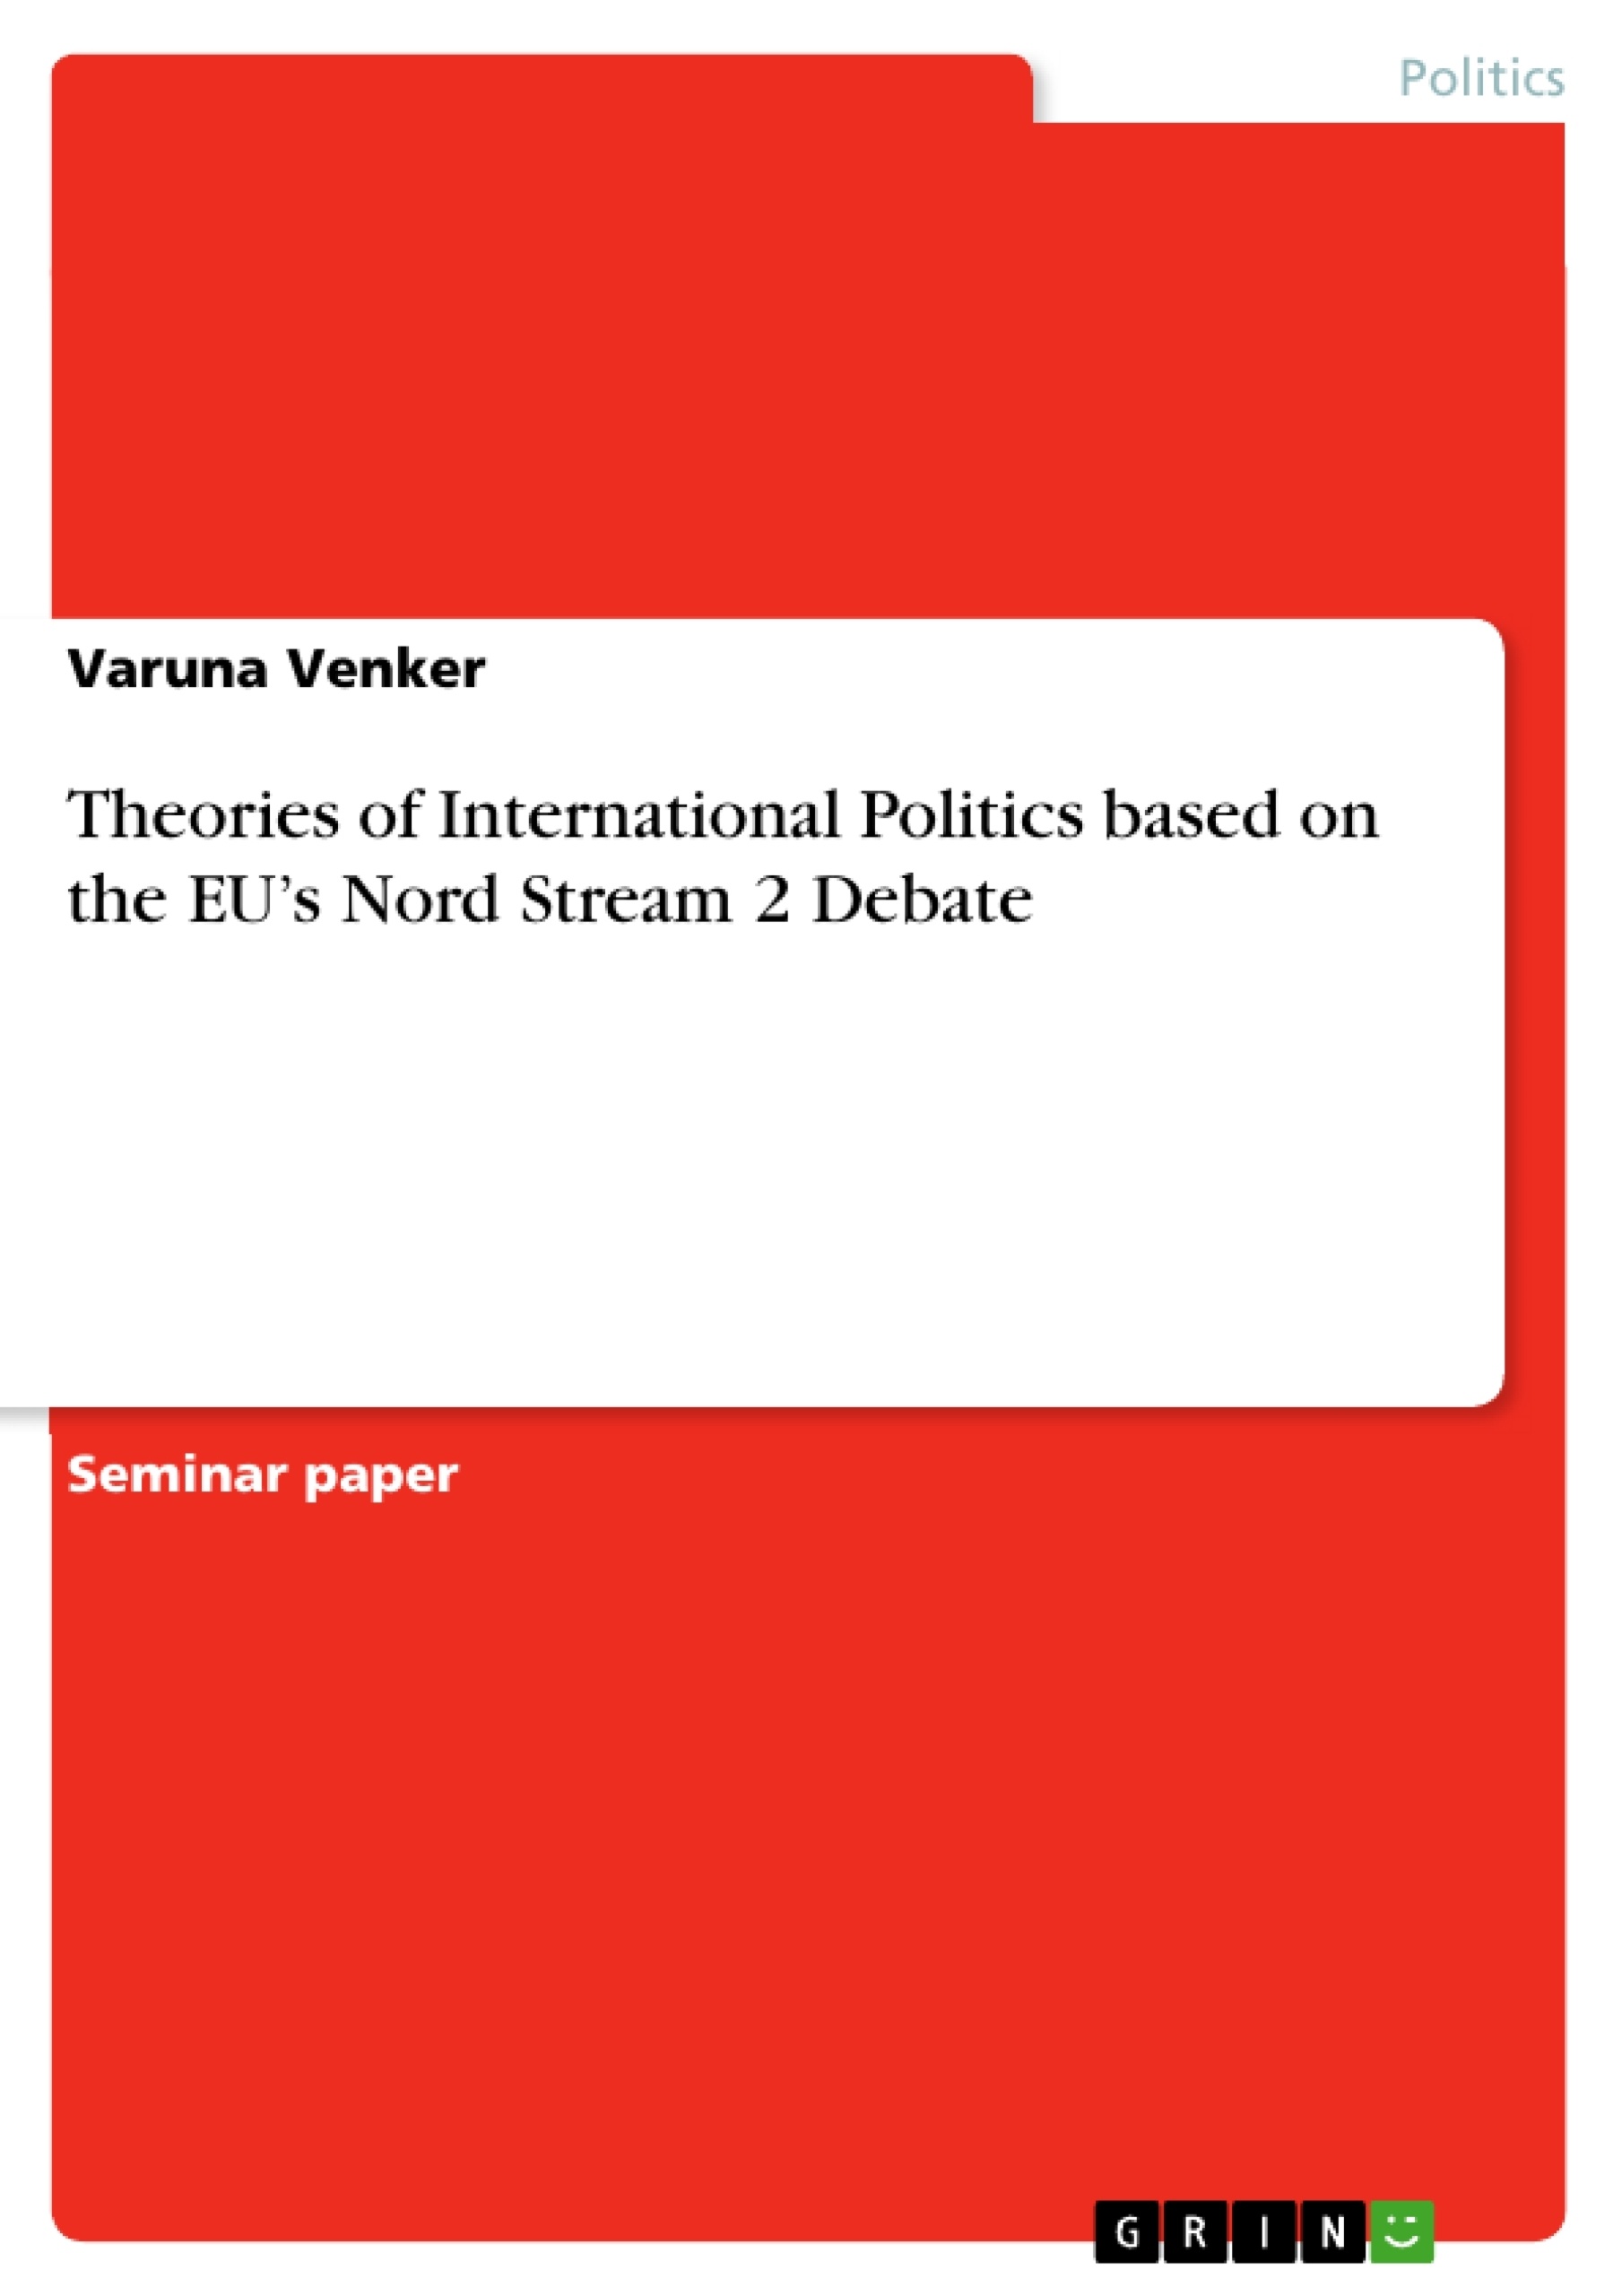 Title: Theories of International Politics based on the EU’s Nord Stream 2 Debate